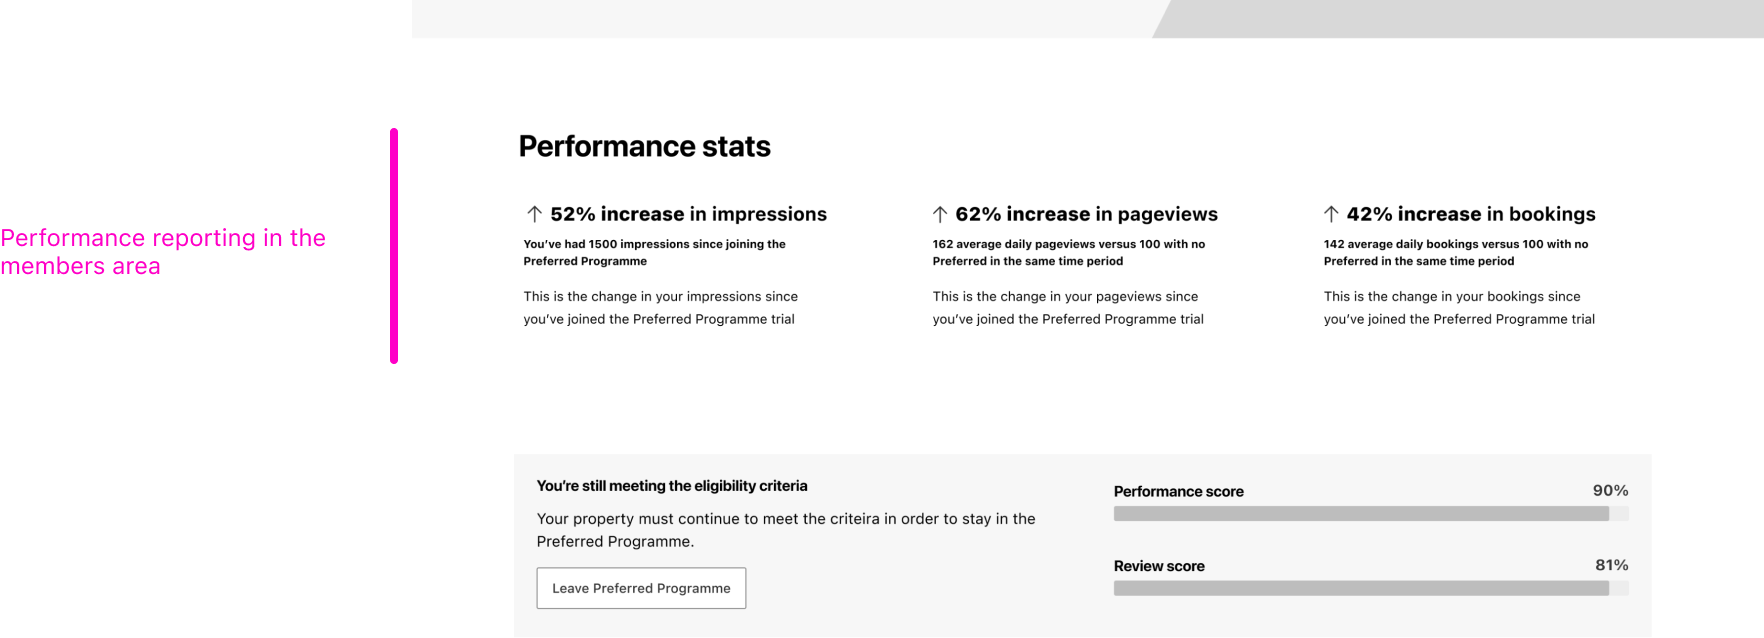 Design highlight - performance metrics in the members area